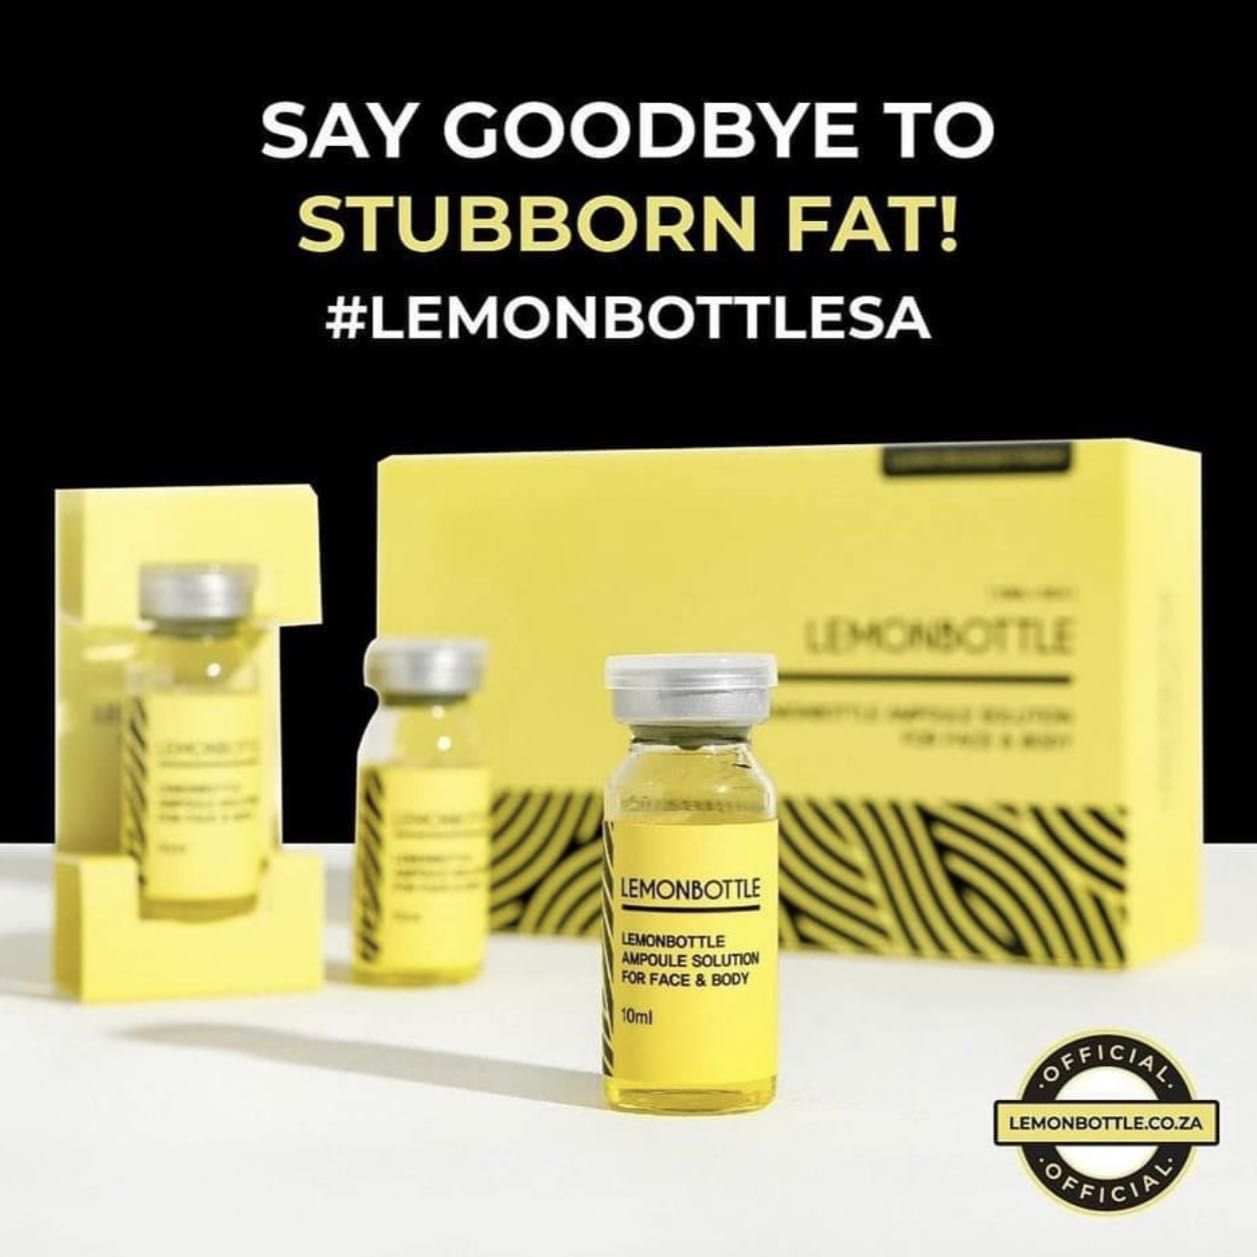 🍋 Lemon Bottle Fat dissolving injections THIGHS portfolio